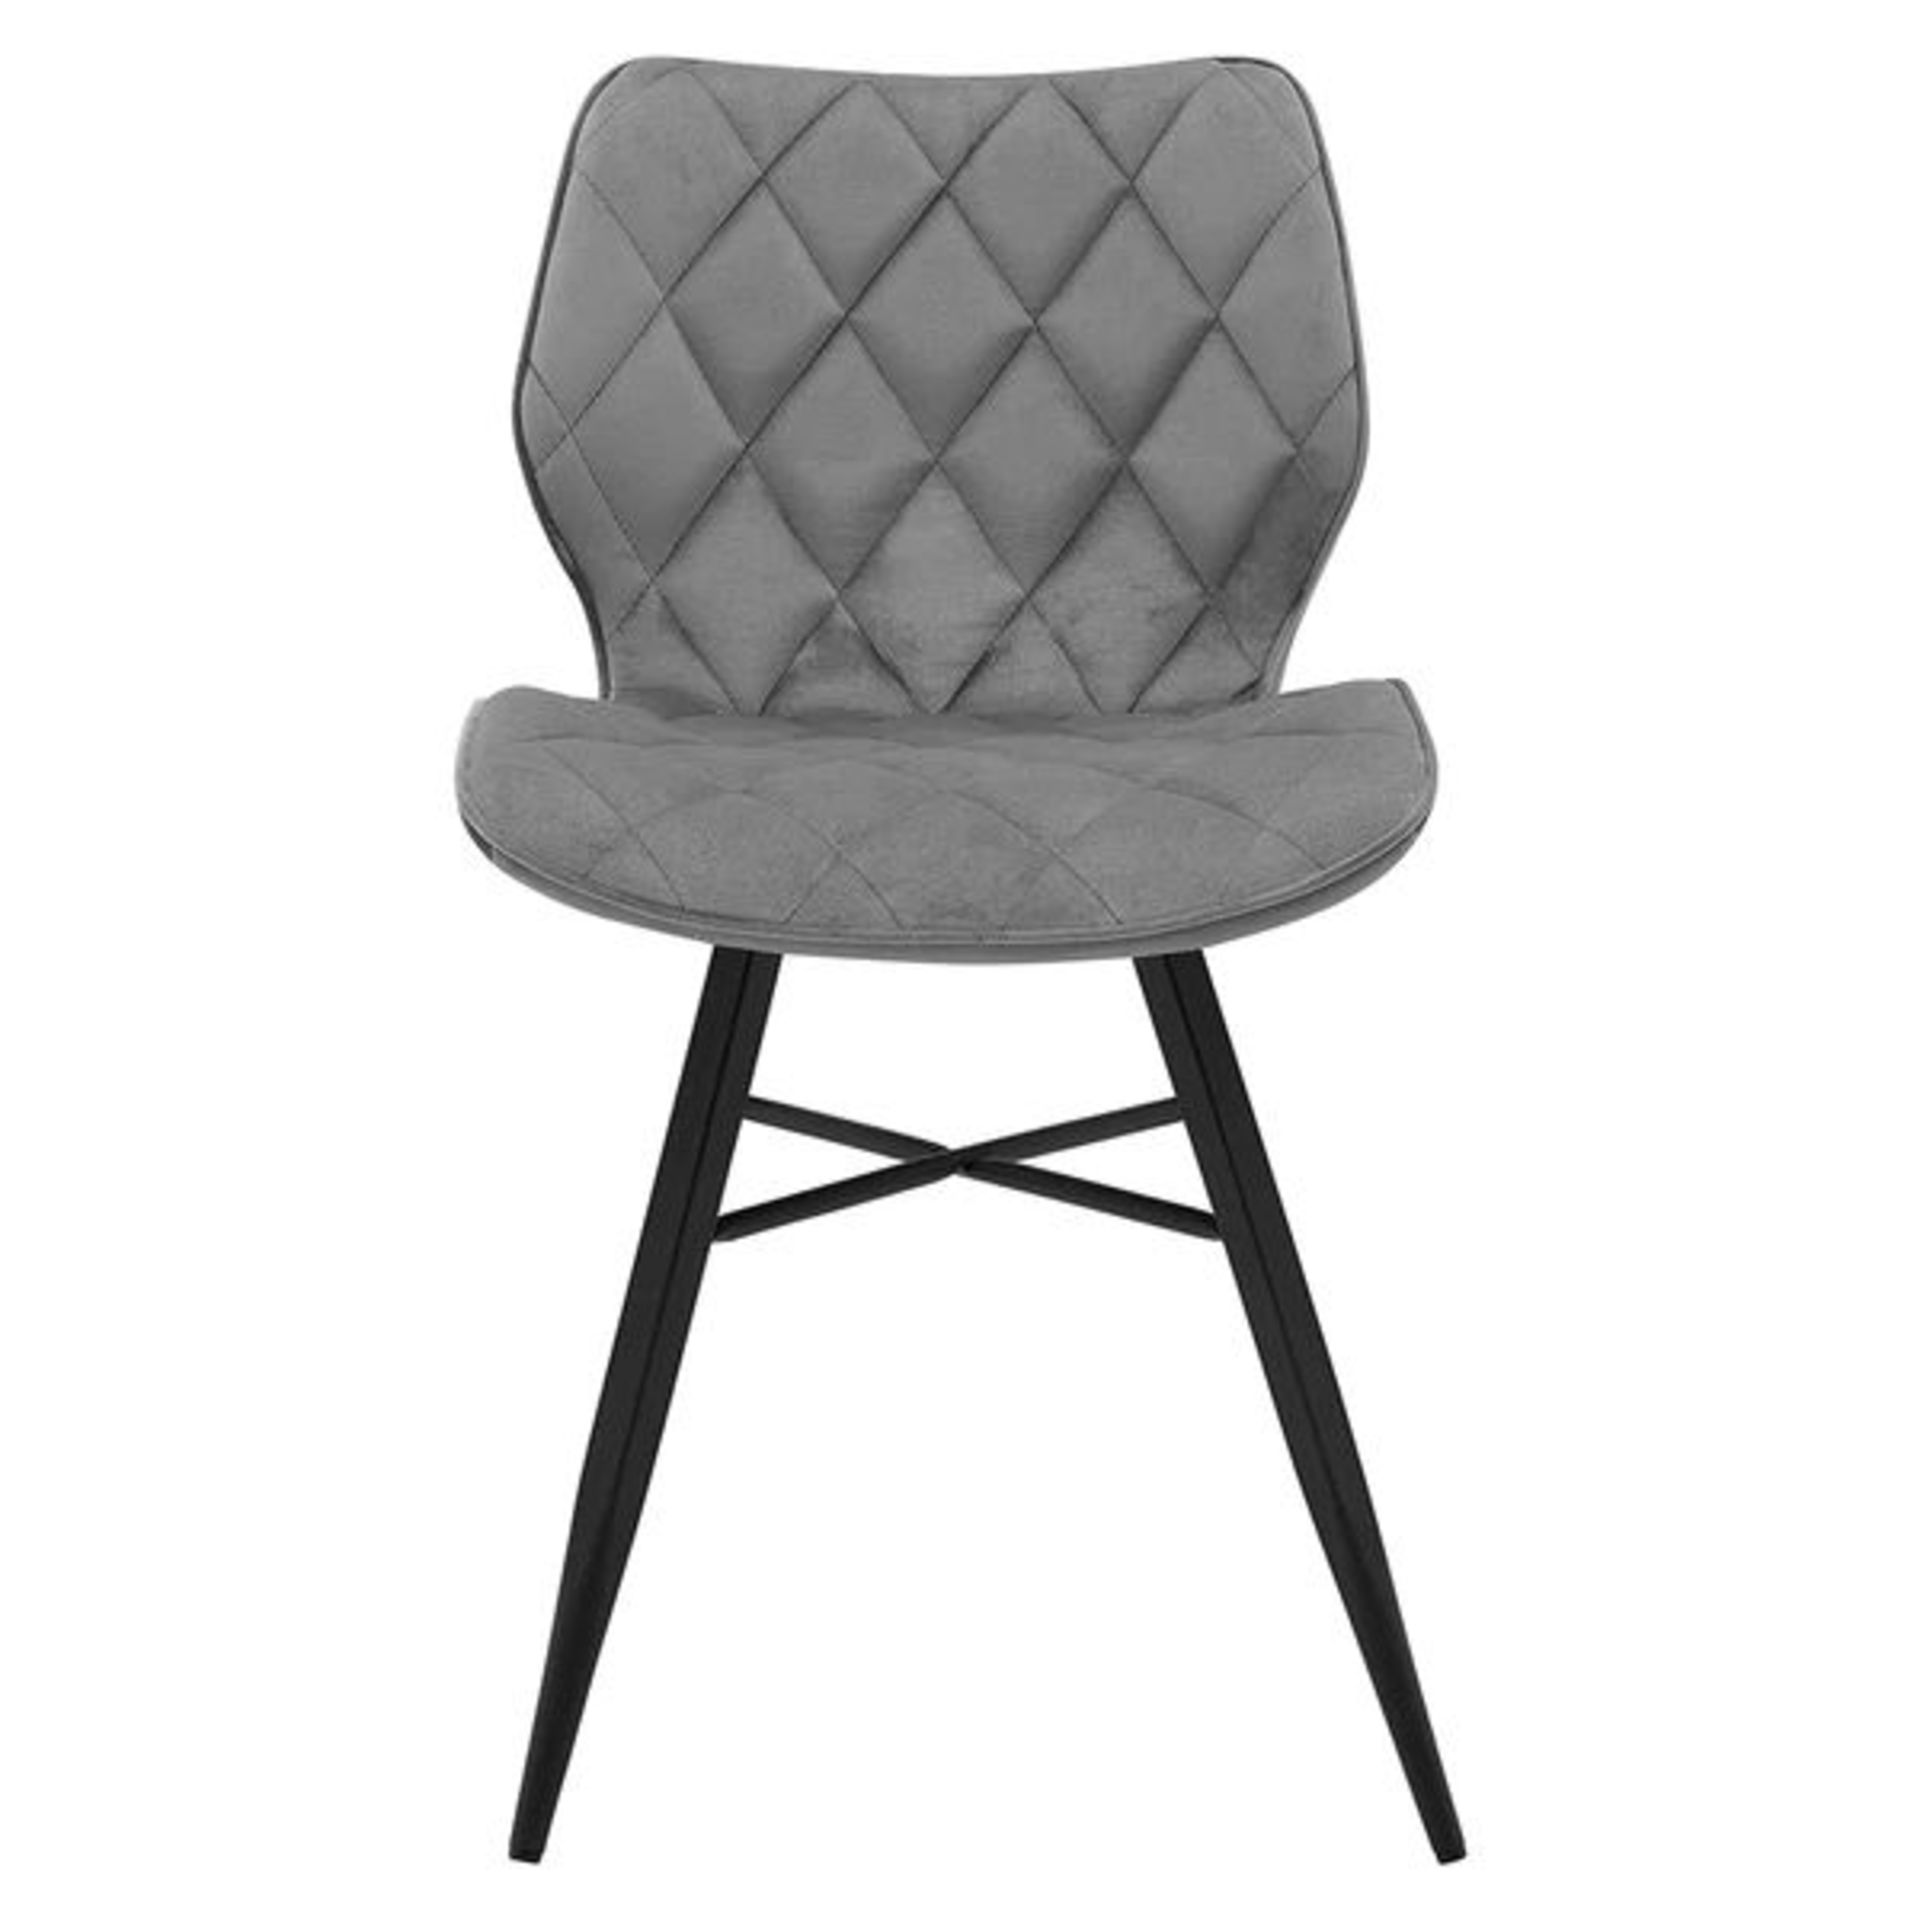 Set of 2 Ampney Diamond Stitch Light Grey Velvet Dining Chair Set of 2 with Metal Legs. - ER30. - Image 2 of 2